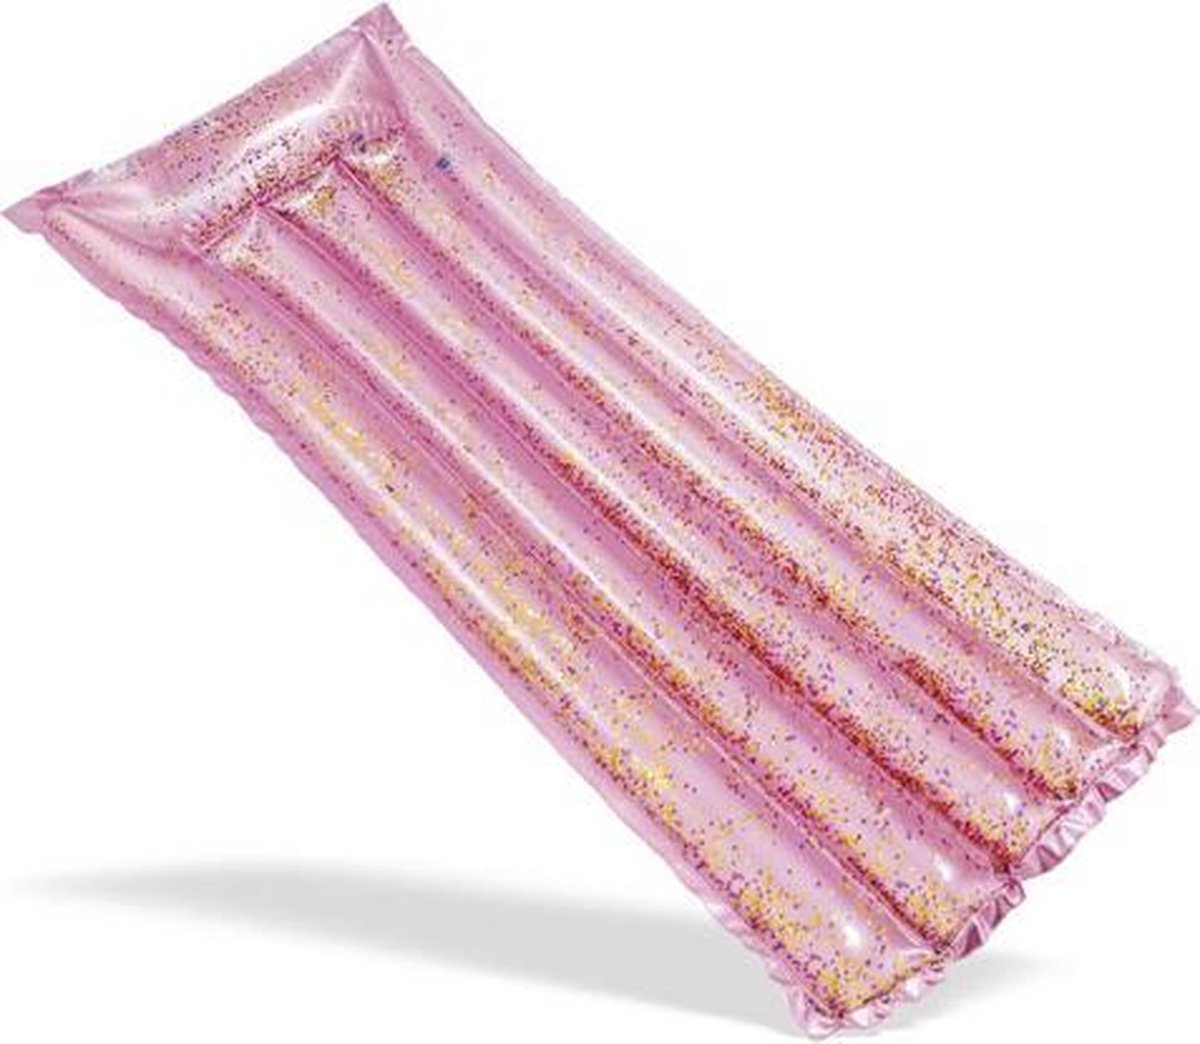 Intex glitter luchtbed - roze - 170 x 53 x 15 centimeter